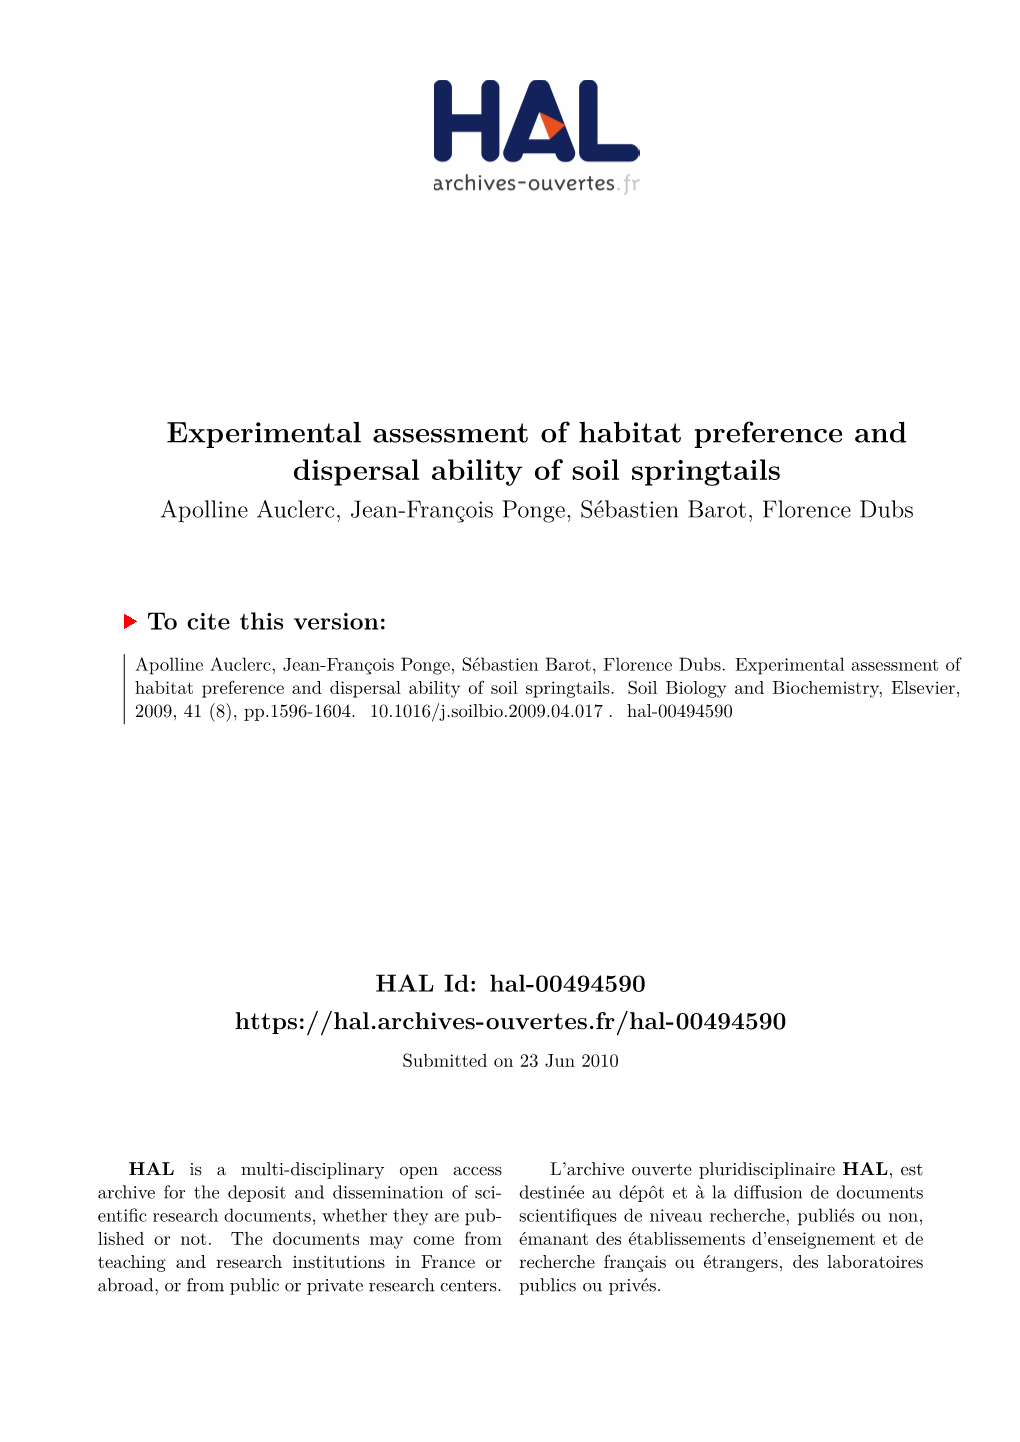 Experimental Assessment of Habitat Preference and Dispersal Ability of Soil Springtails Apolline Auclerc, Jean-François Ponge, Sébastien Barot, Florence Dubs